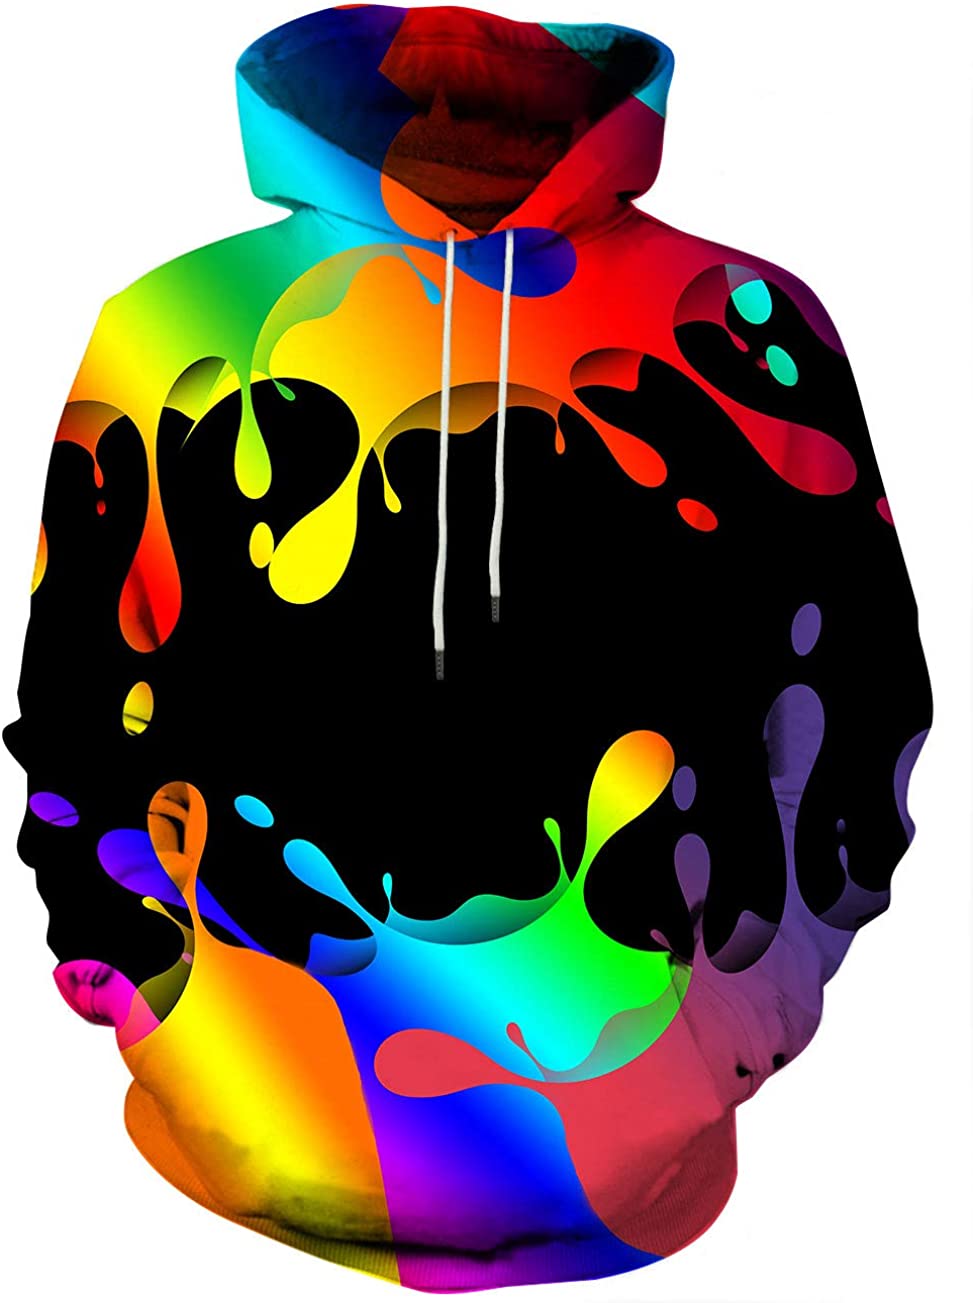 Asylvain Unisex Graphic Hoodies 3D Cool Design Print Colorful Hooded Sweatshirt for Men and Women 